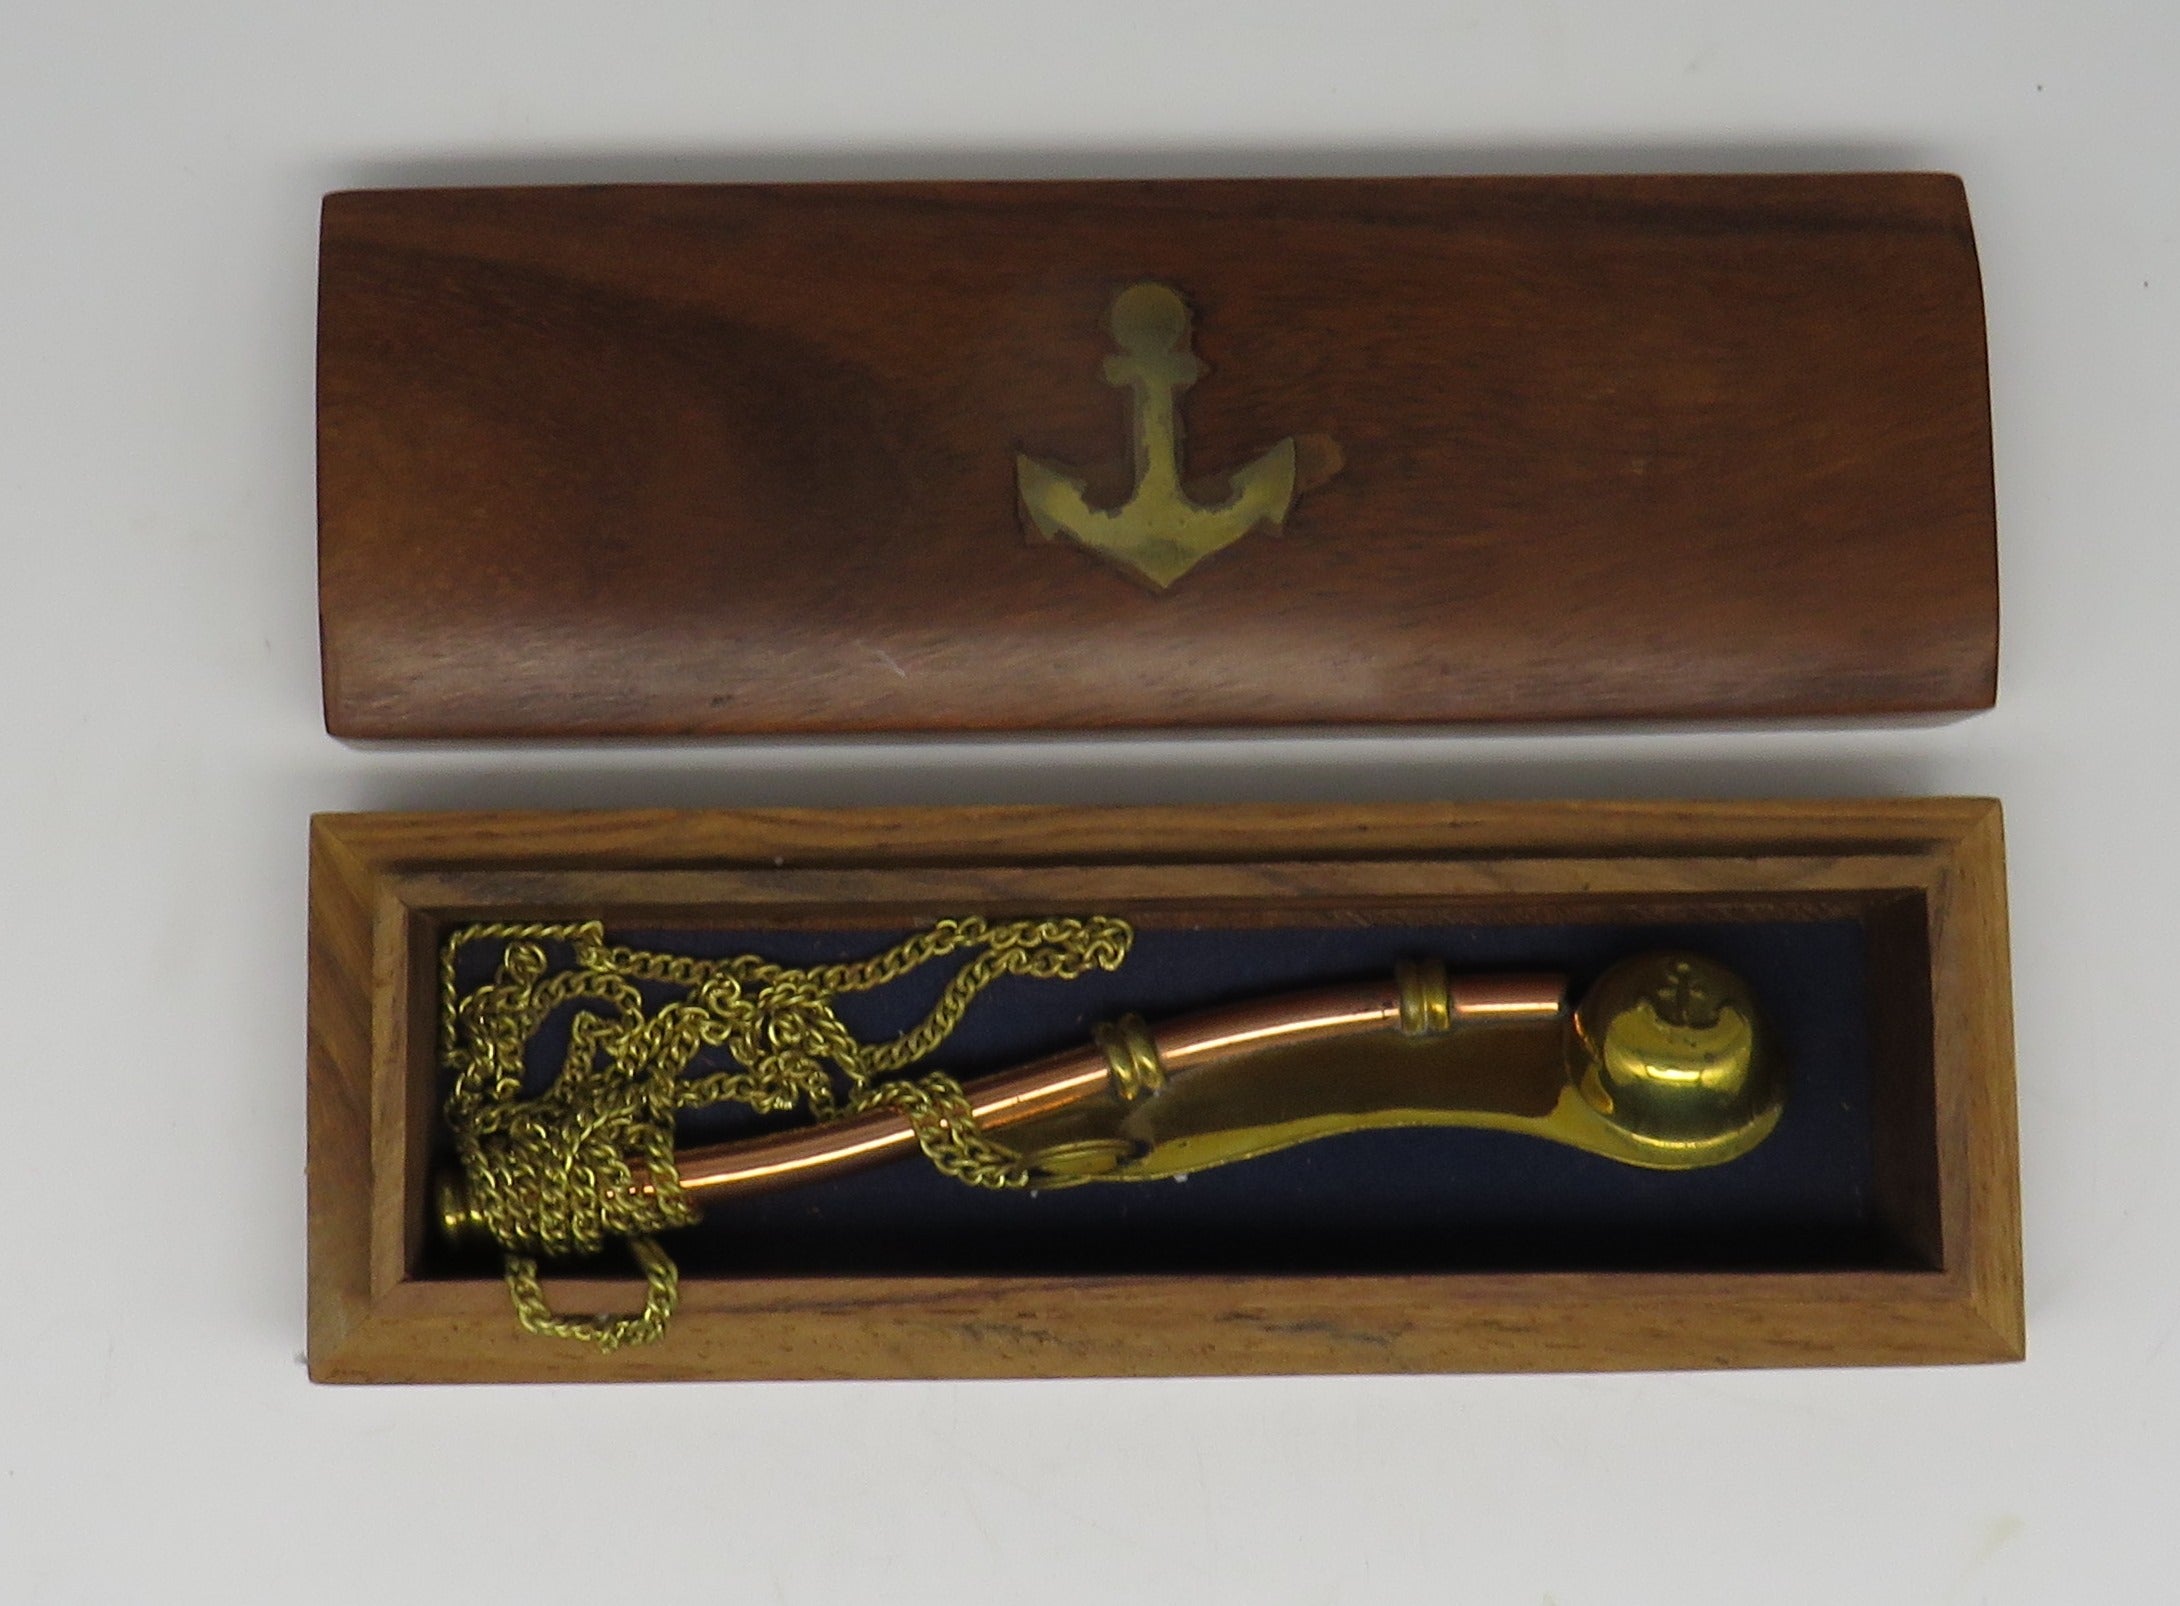 Nautical Brass Bosun's Whistle